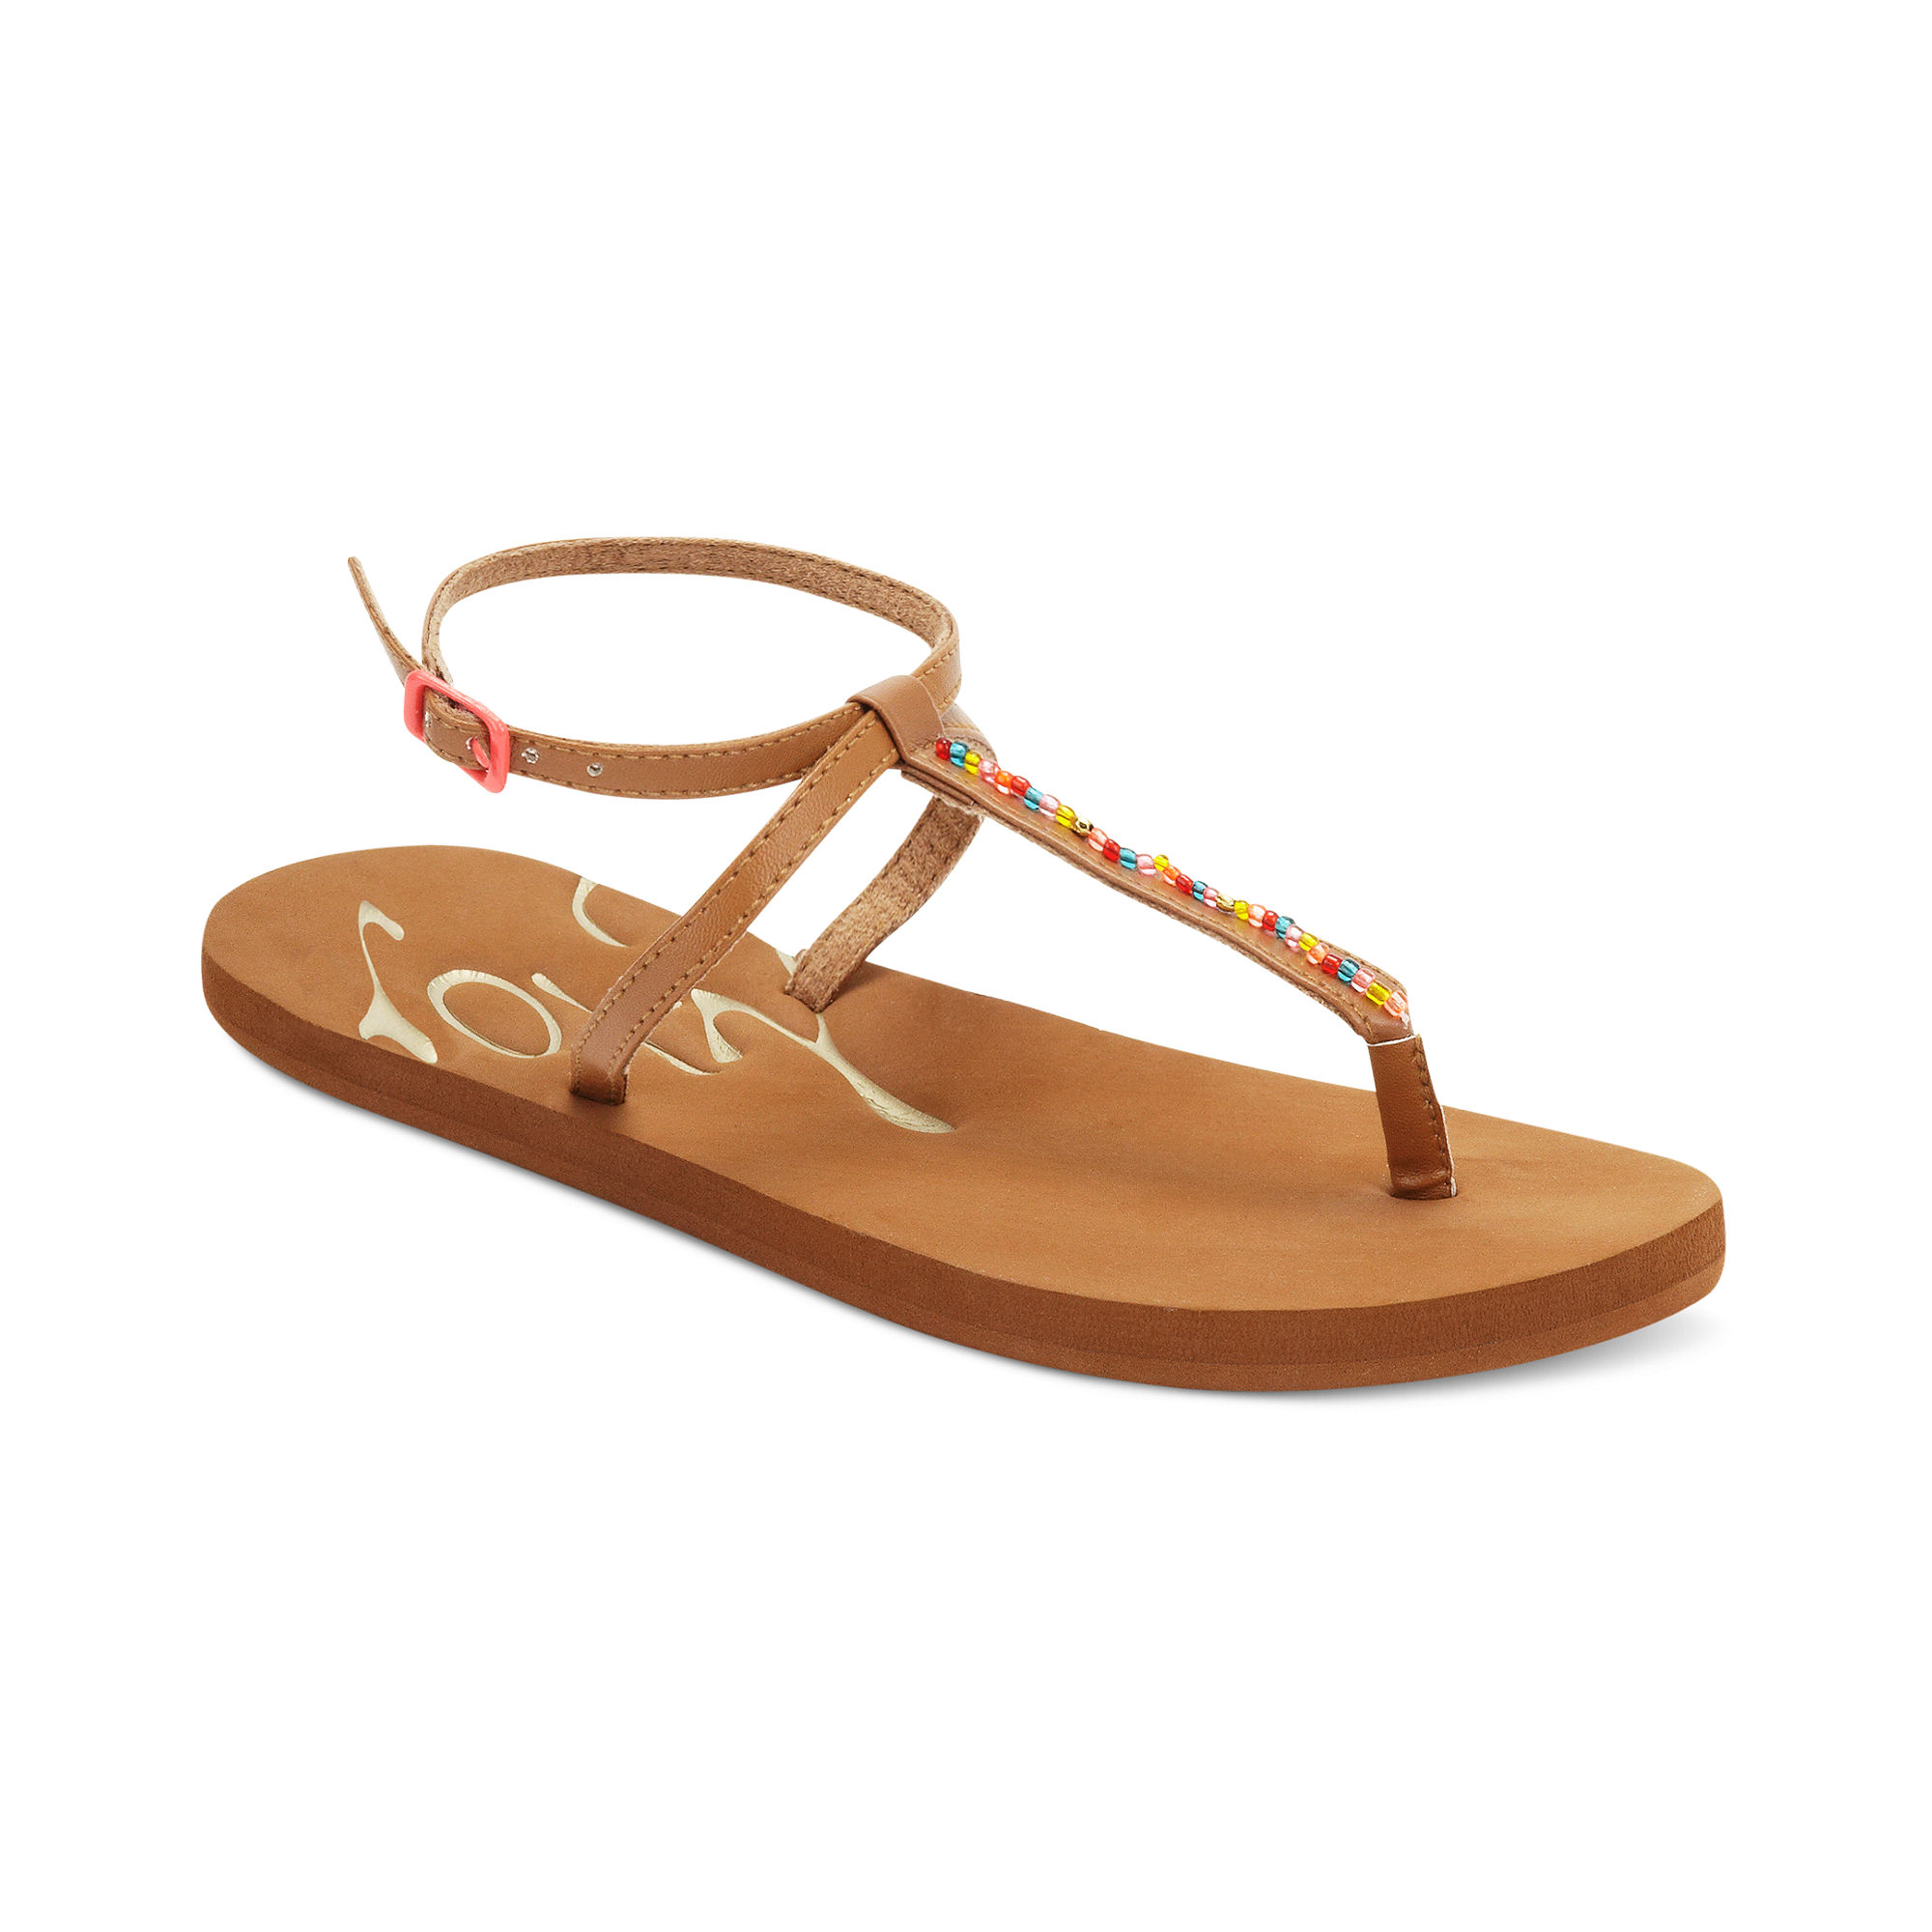 Roxy Spumoni Flat Sandals in Brown (tan) | Lyst